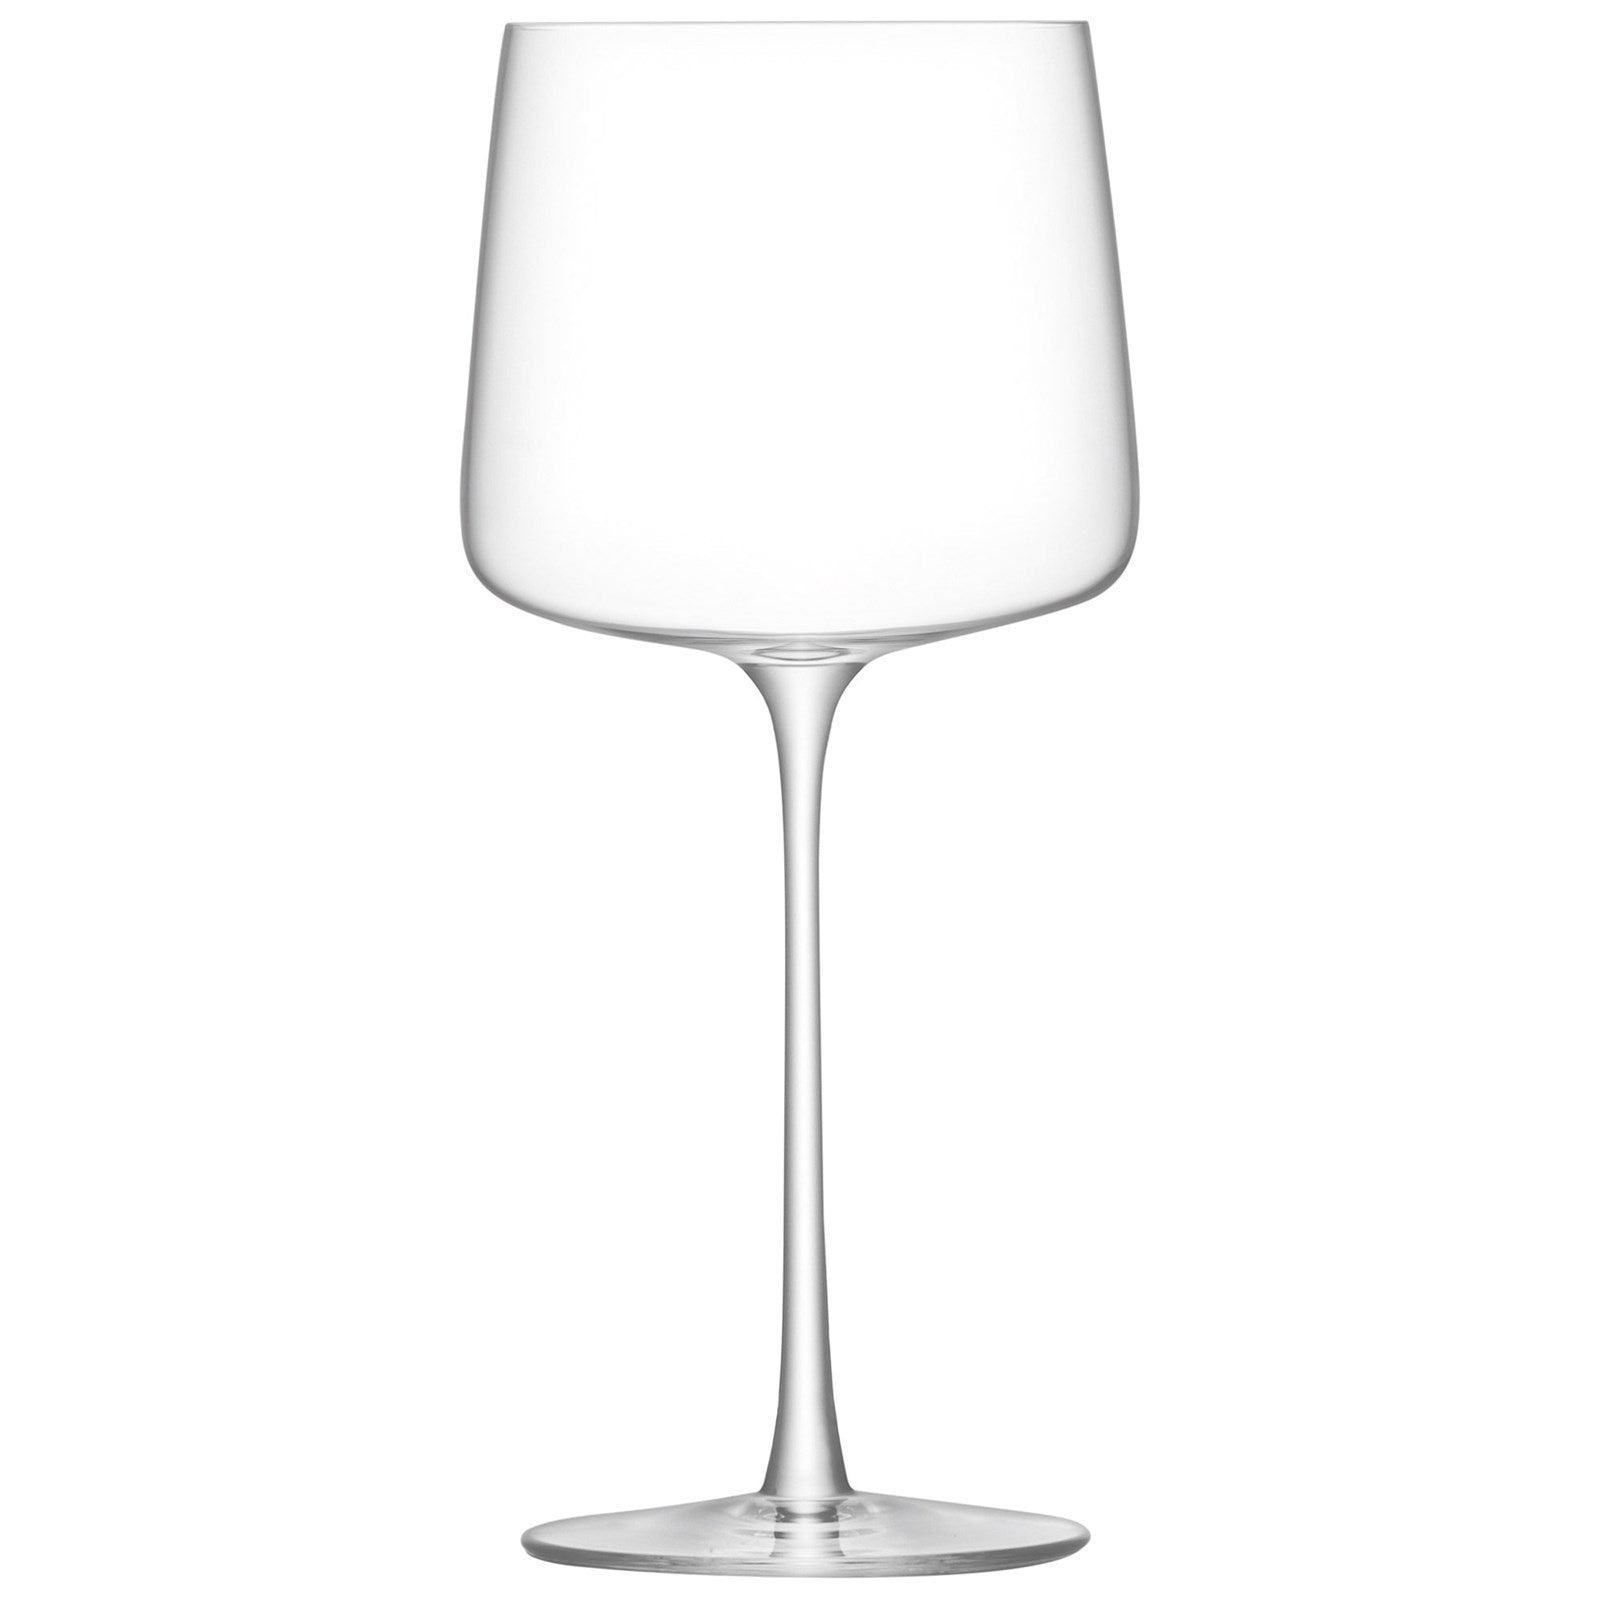 4er Set Metropolitan Wein Glas 400ml klar - KAQTU Design